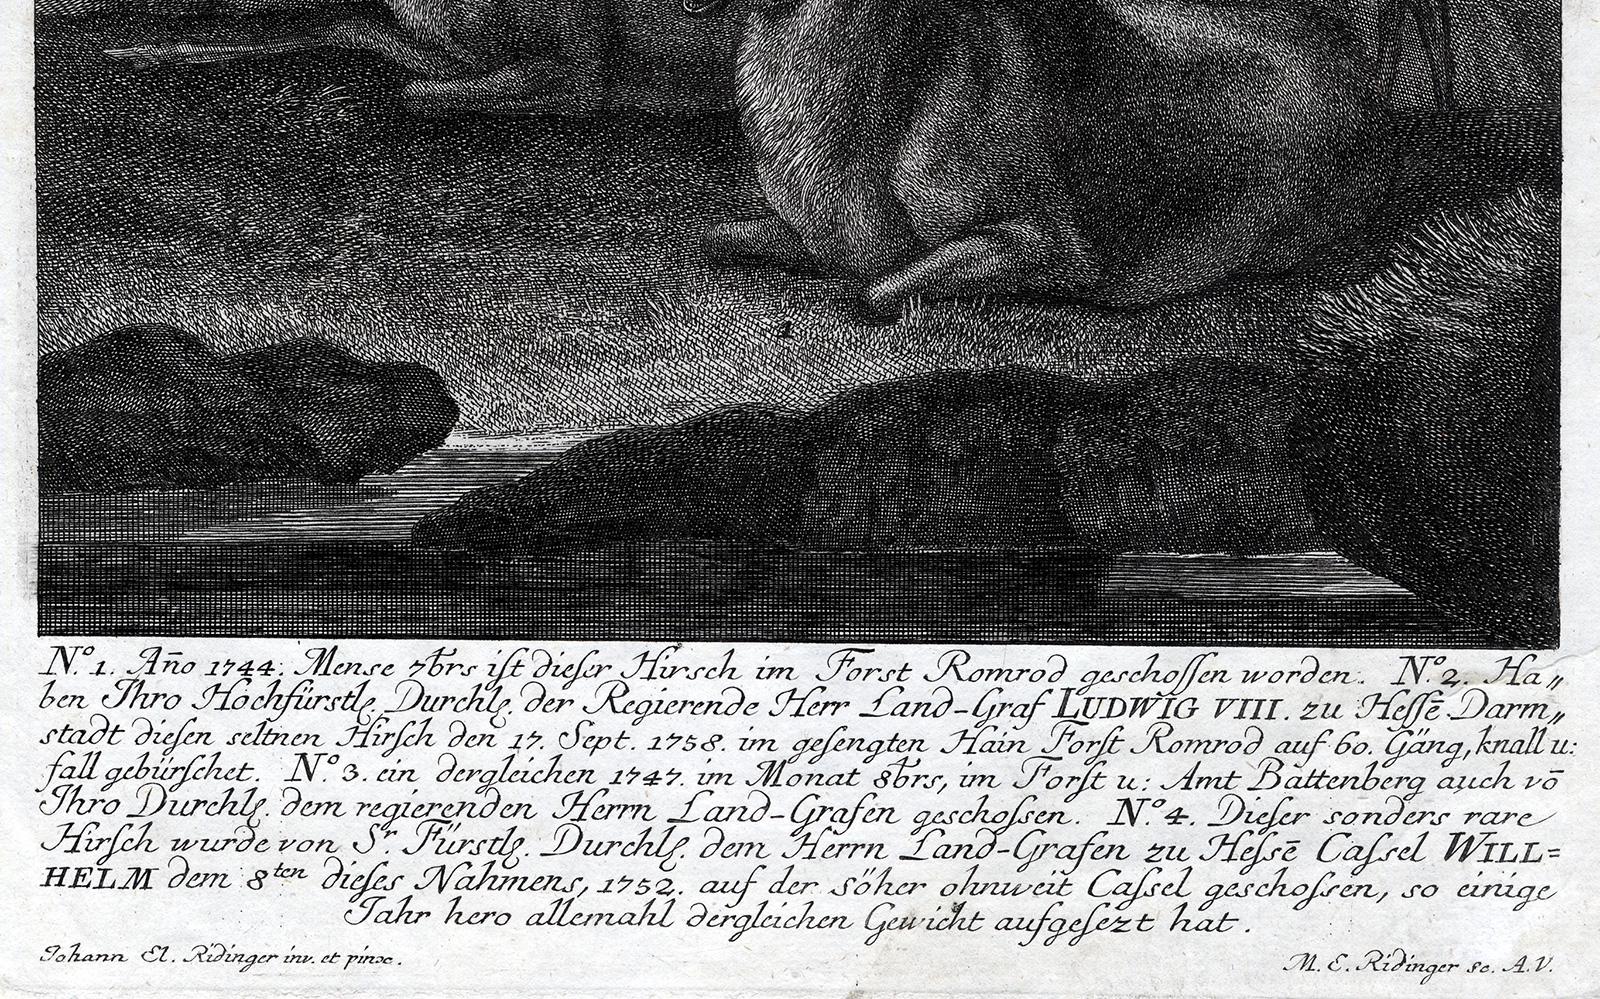 Subject: Antique print, titled: 'No. 1 Ano 1744: … Ist dieser Hirsch im Forst Romrod geschossen worden ... ' - Four deer shot in the Romrod forest by noblemen, with details about their antlers.

Description:  From: 'Virtute et Ingenio. Genaue und